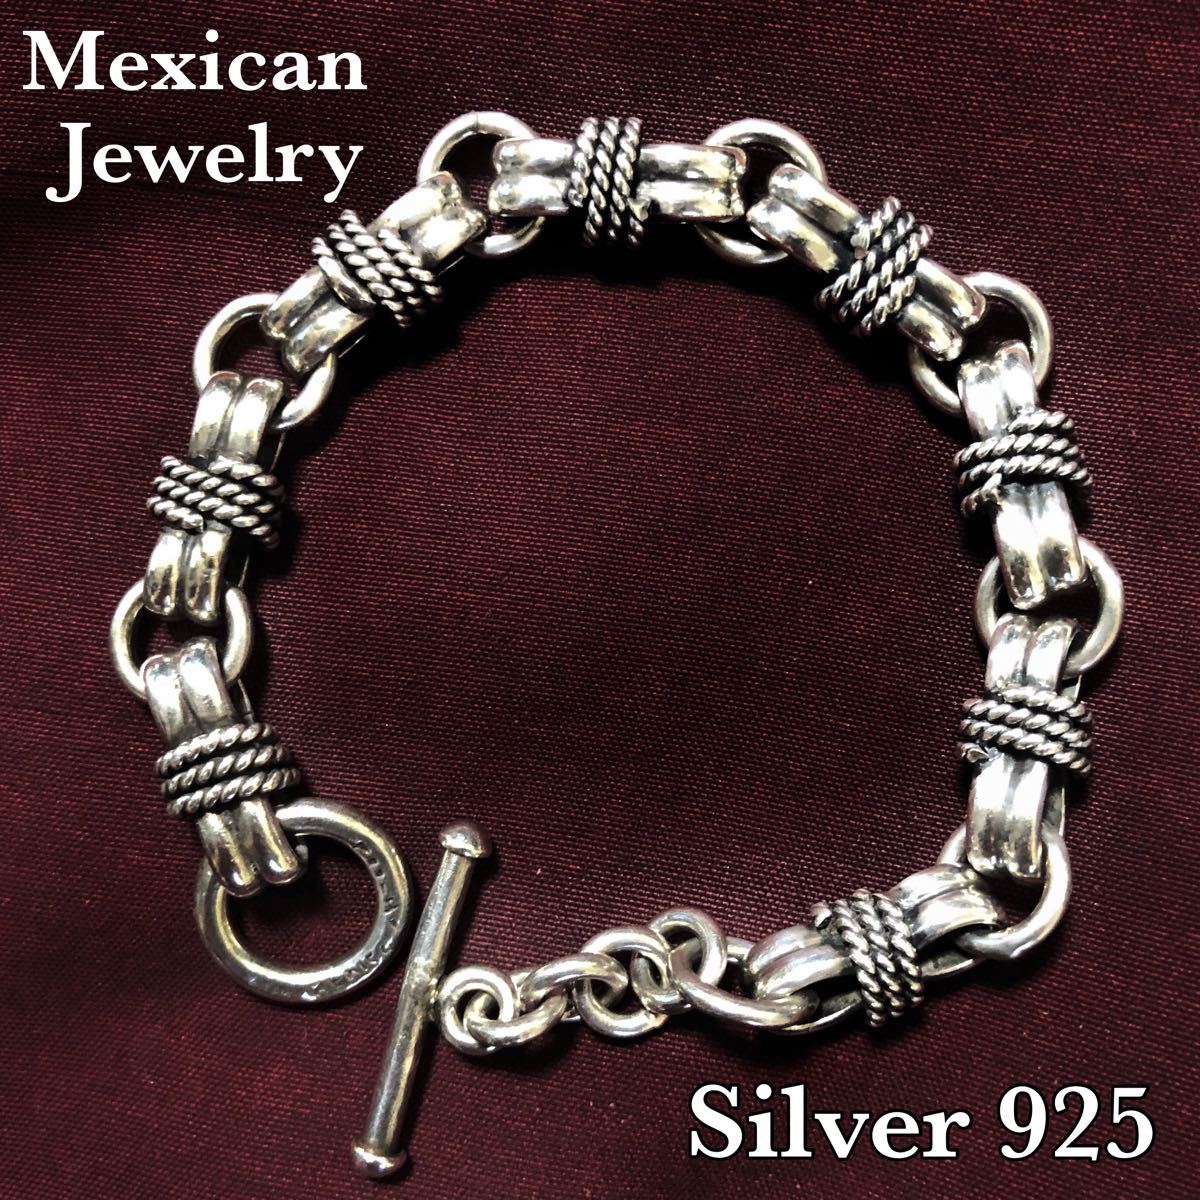 Mexican Jewelry メキシカンジュエリー シルバー 925 - www